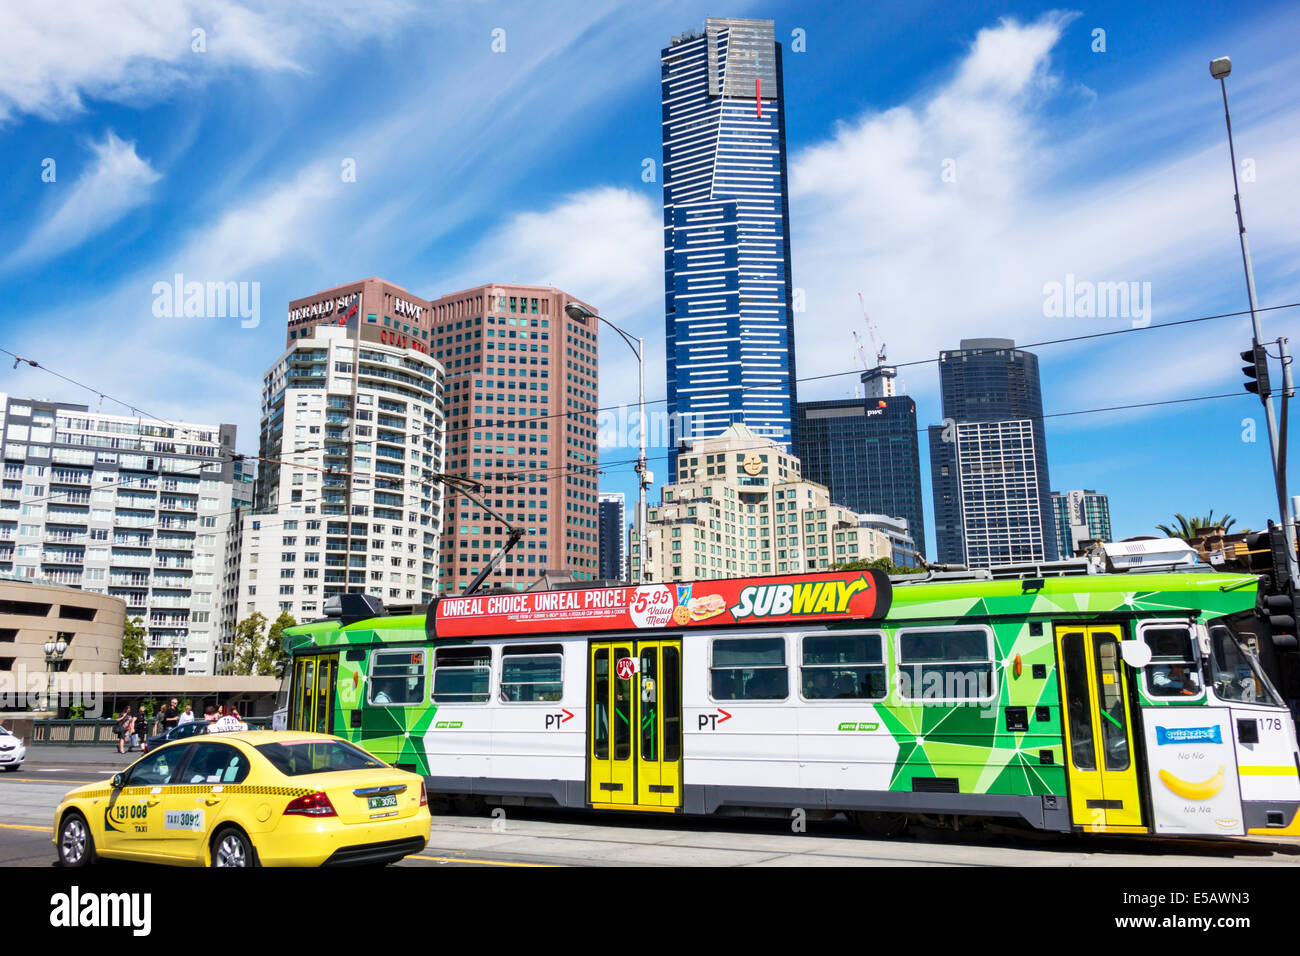 Melbourne Australia, Southbank, Princes Bridge, St. Kilda Road, tranvía, tranvía, tráfico, horizonte urbano, edificios altos, rascacielos, Eureka Tower, bui más alto Foto de stock